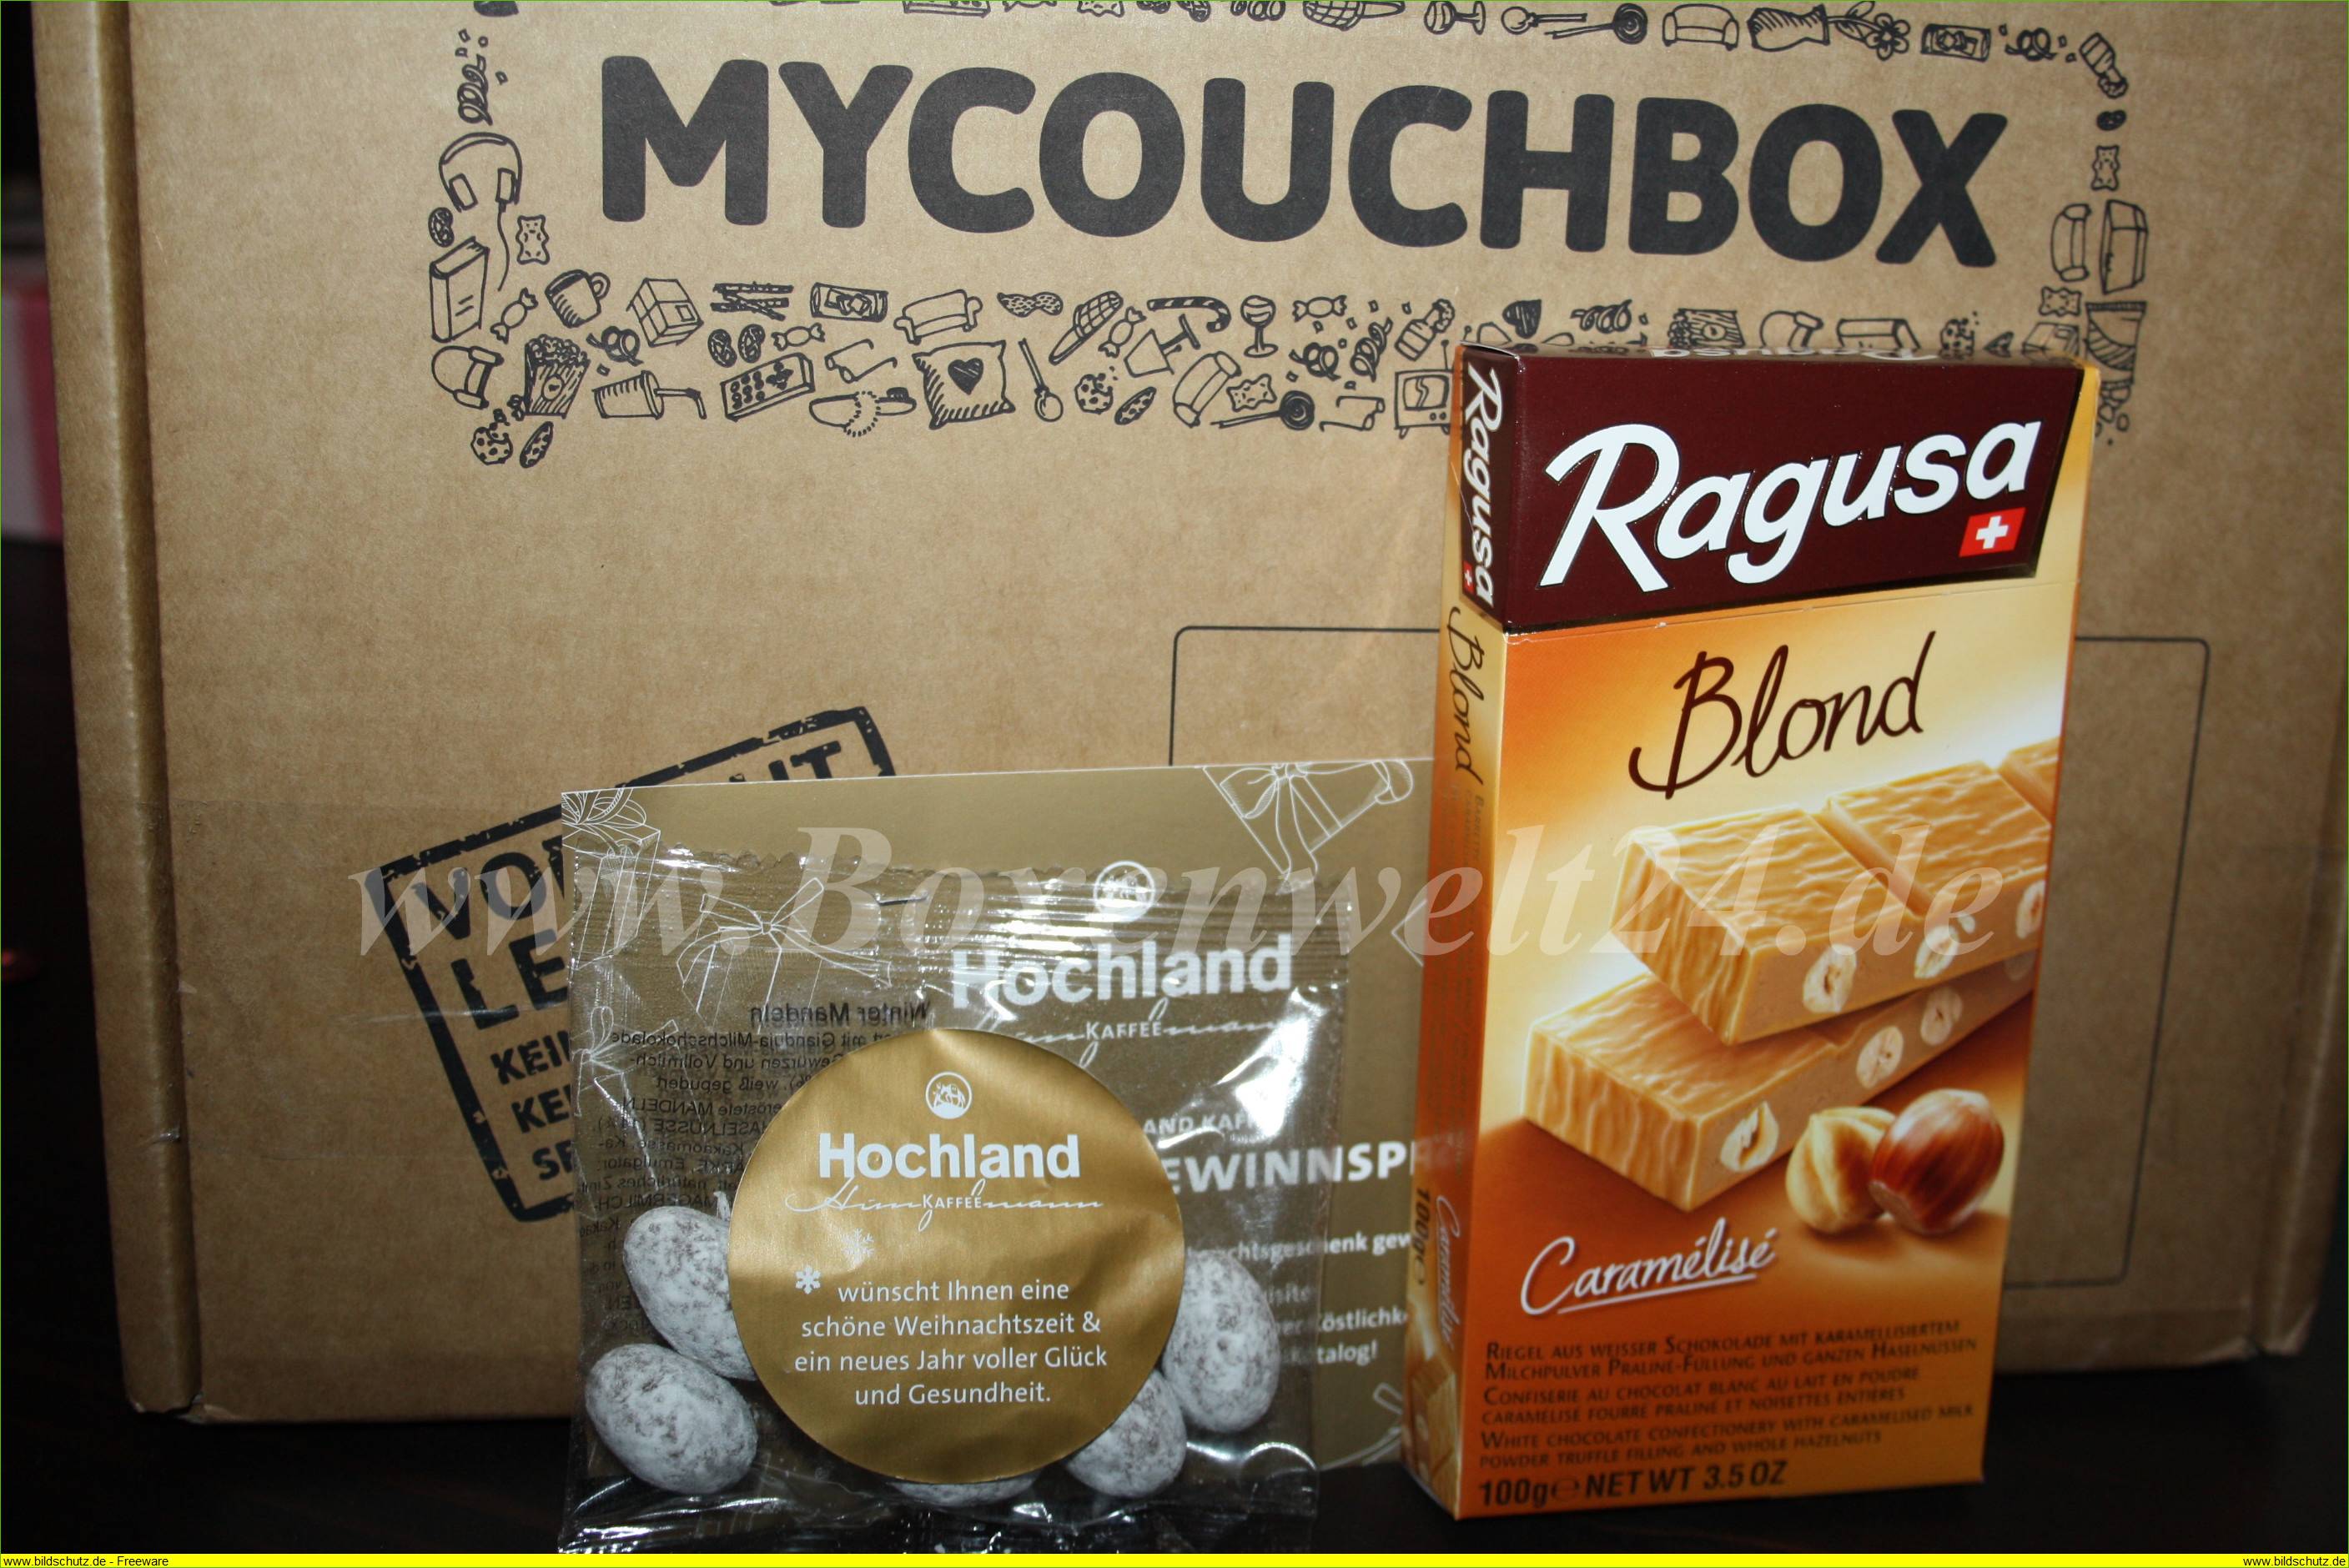 MyCouchbox